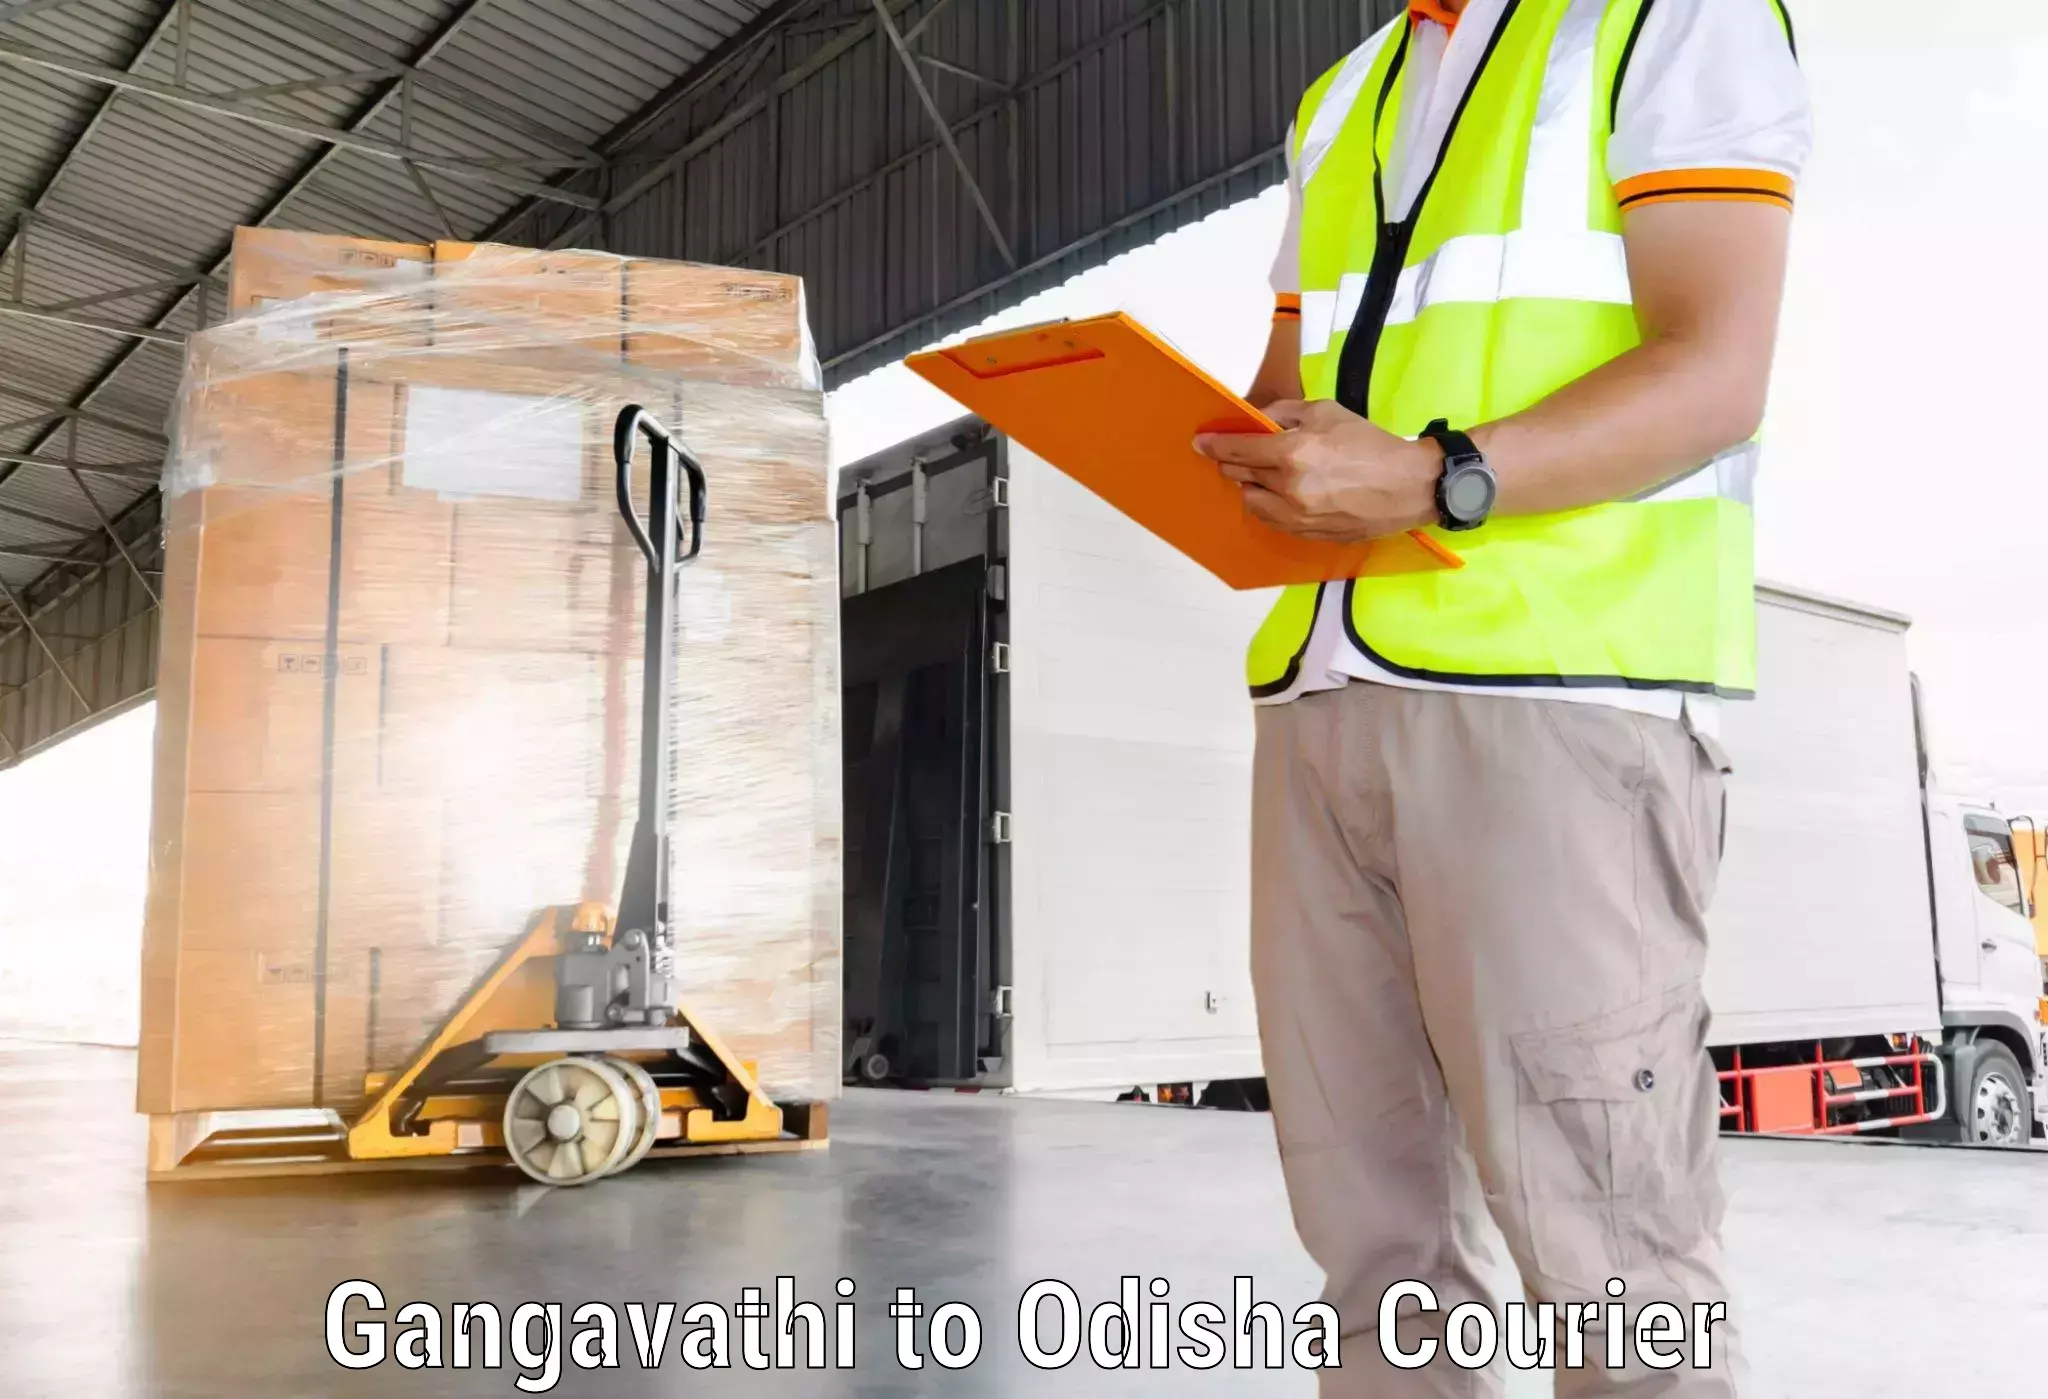 Global delivery options Gangavathi to Kishorenagar